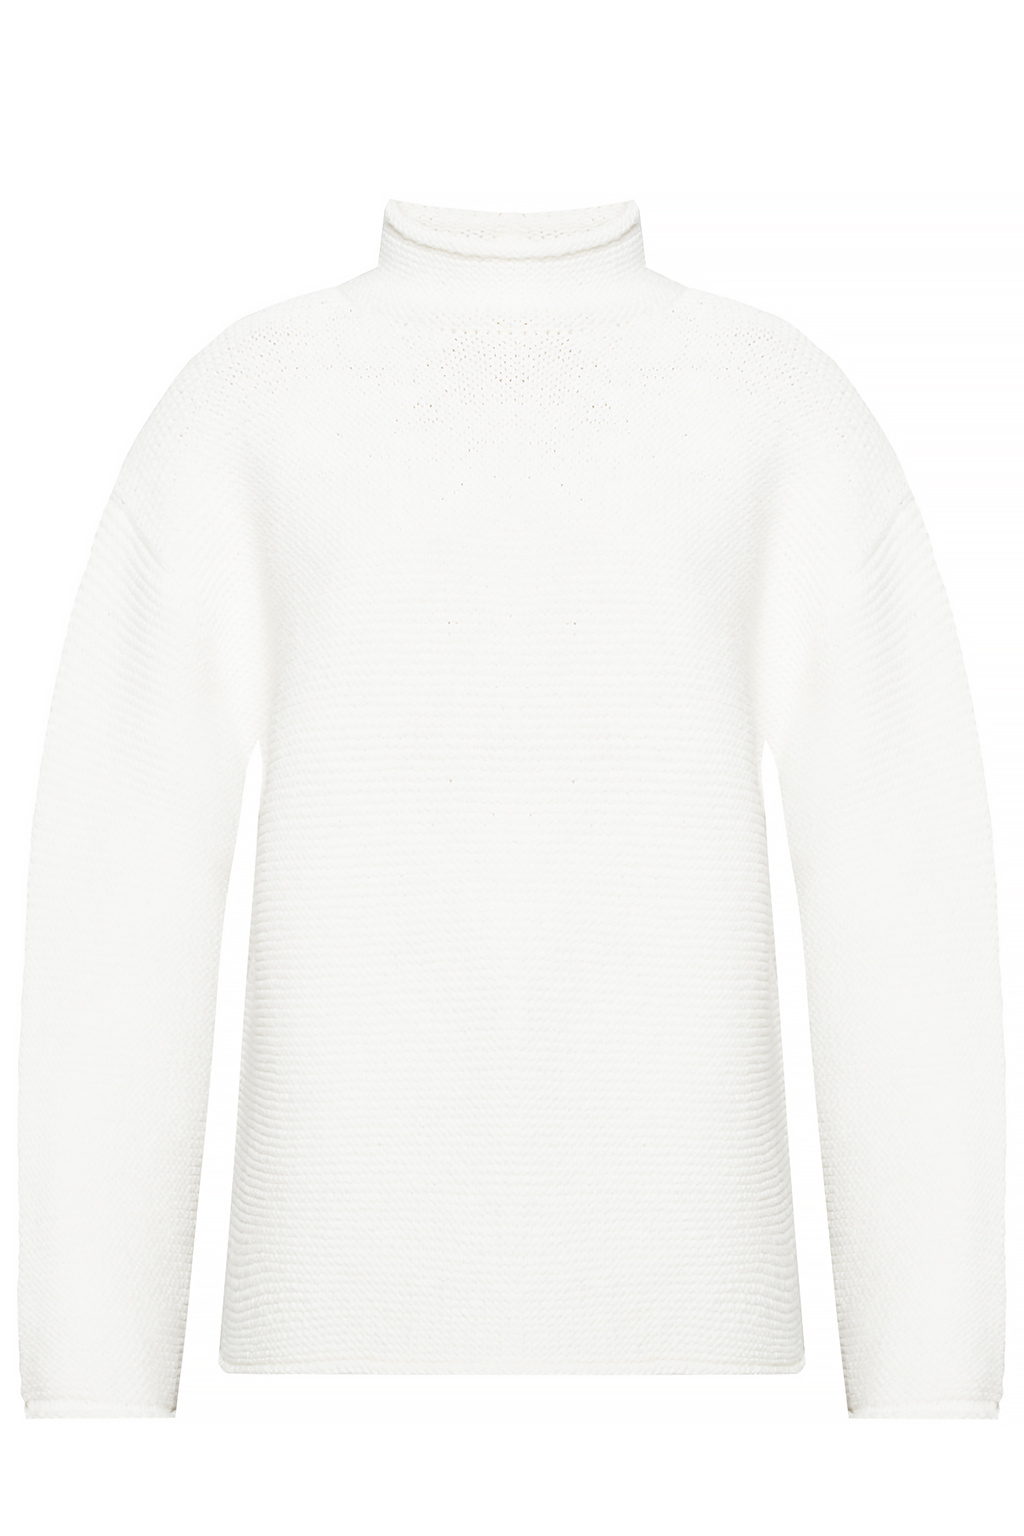 Proenza Schouler White Label Rib-knit sweater